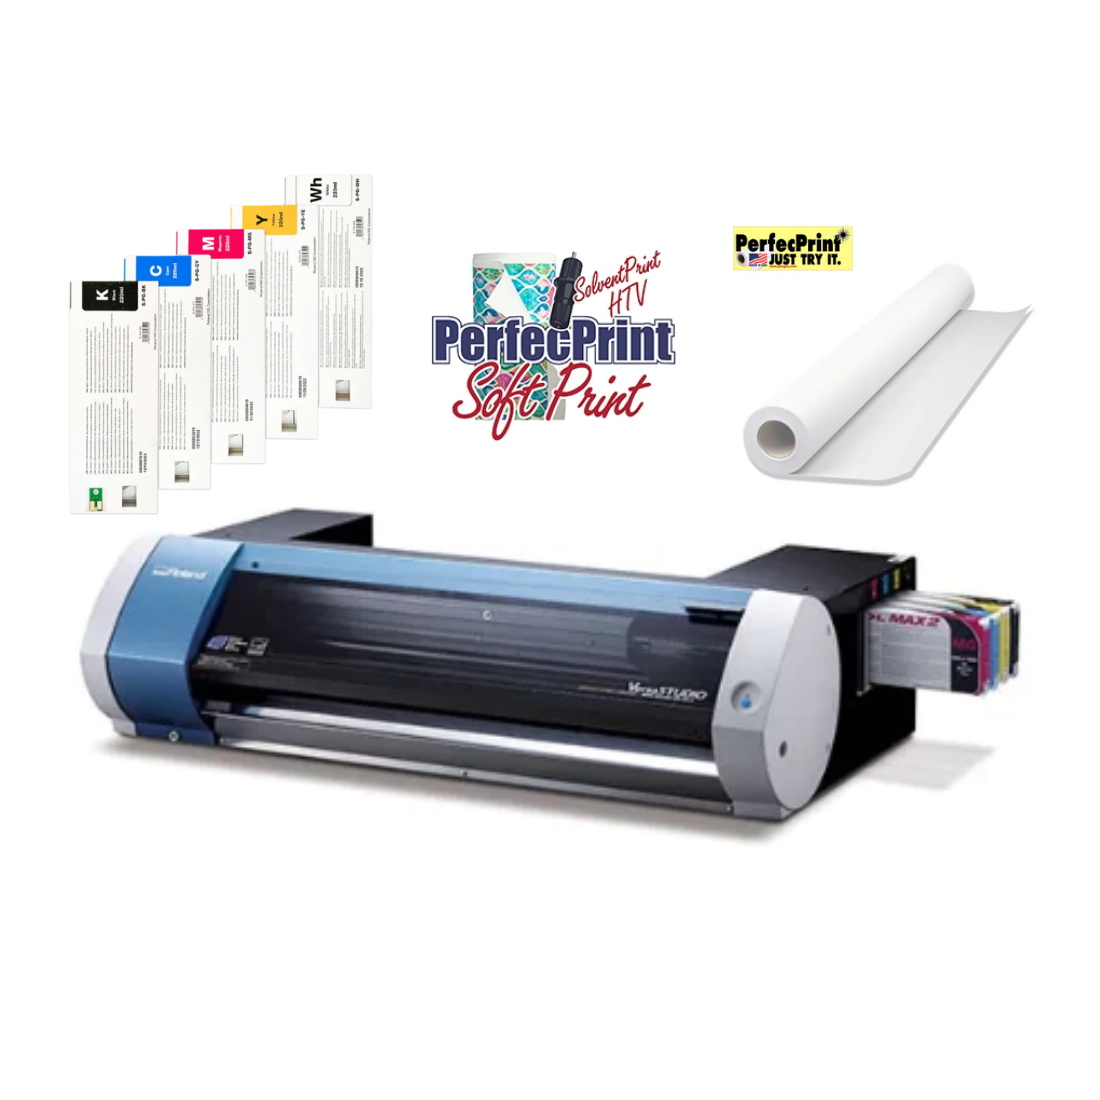 Roland BN-20A Eco Solvent Print/Cut Machine - Super Sale!